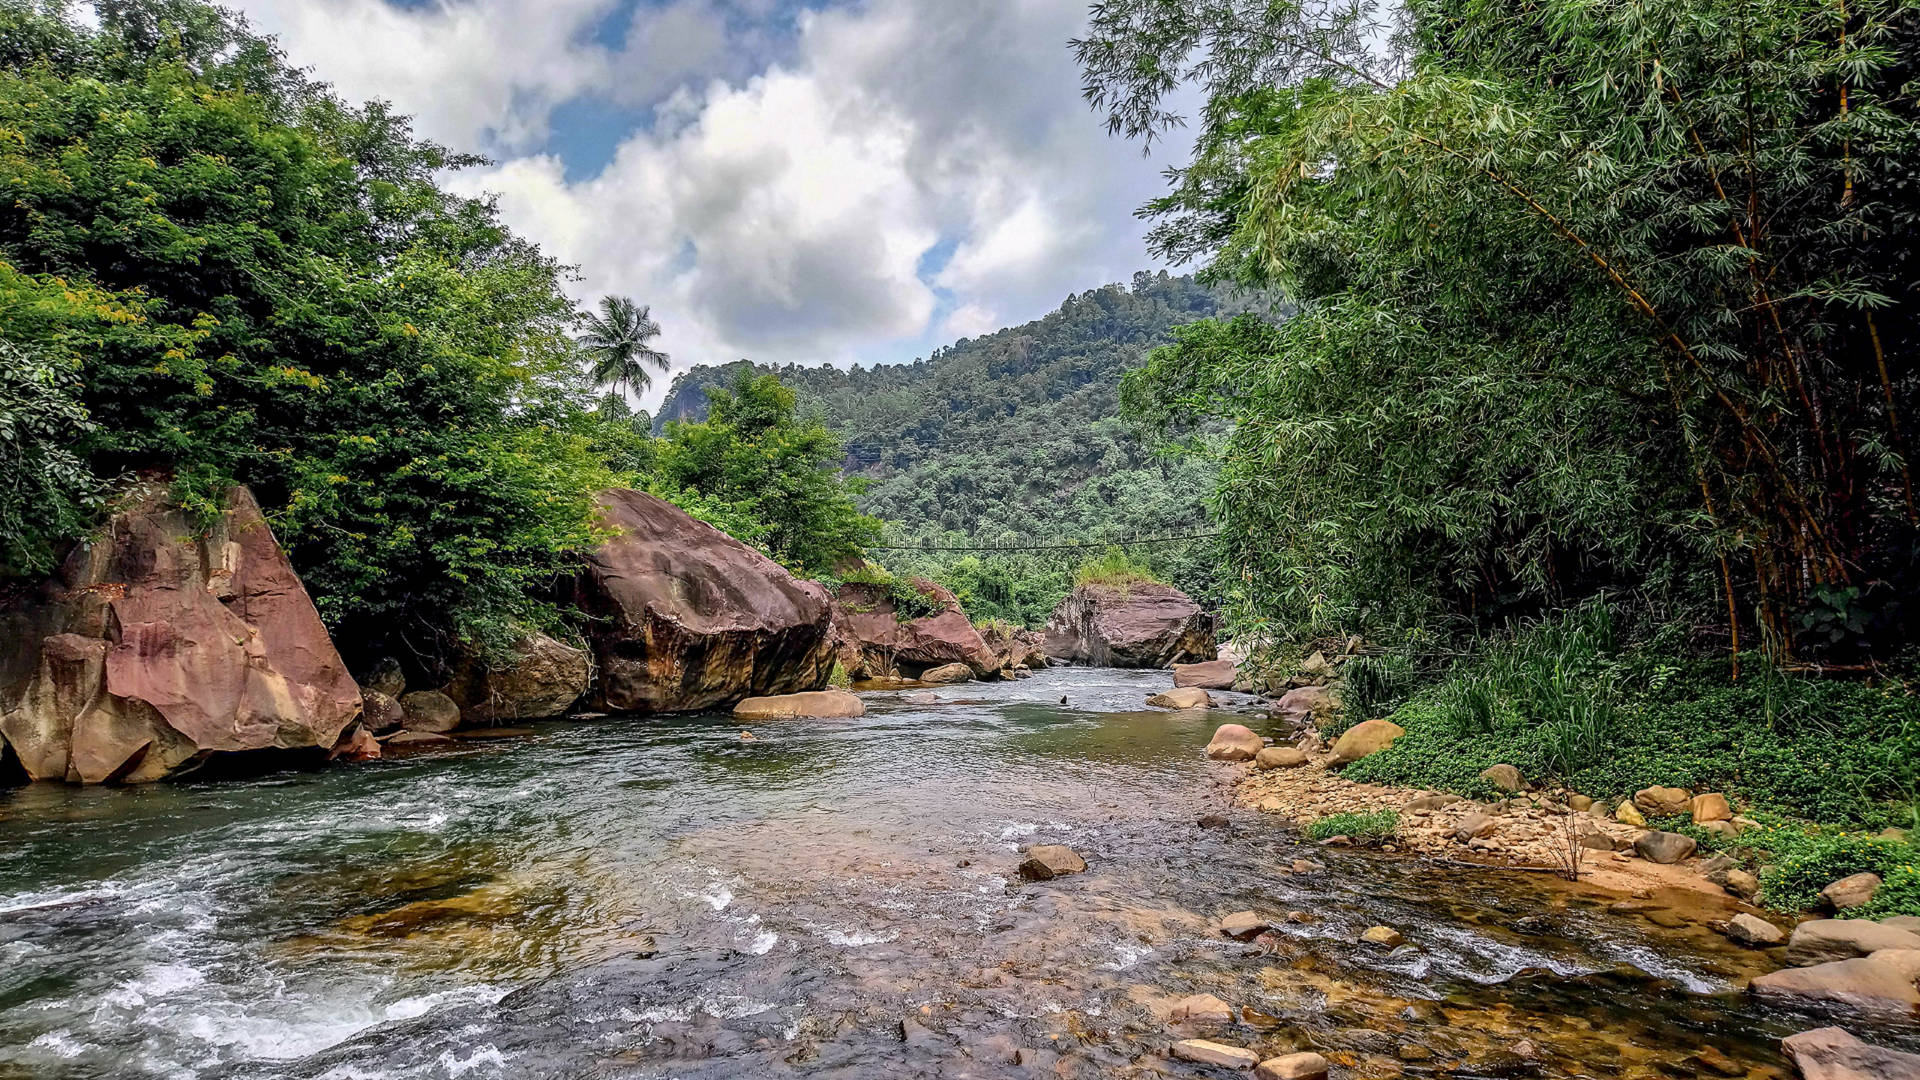 Sri Lanka We-oya River Picture